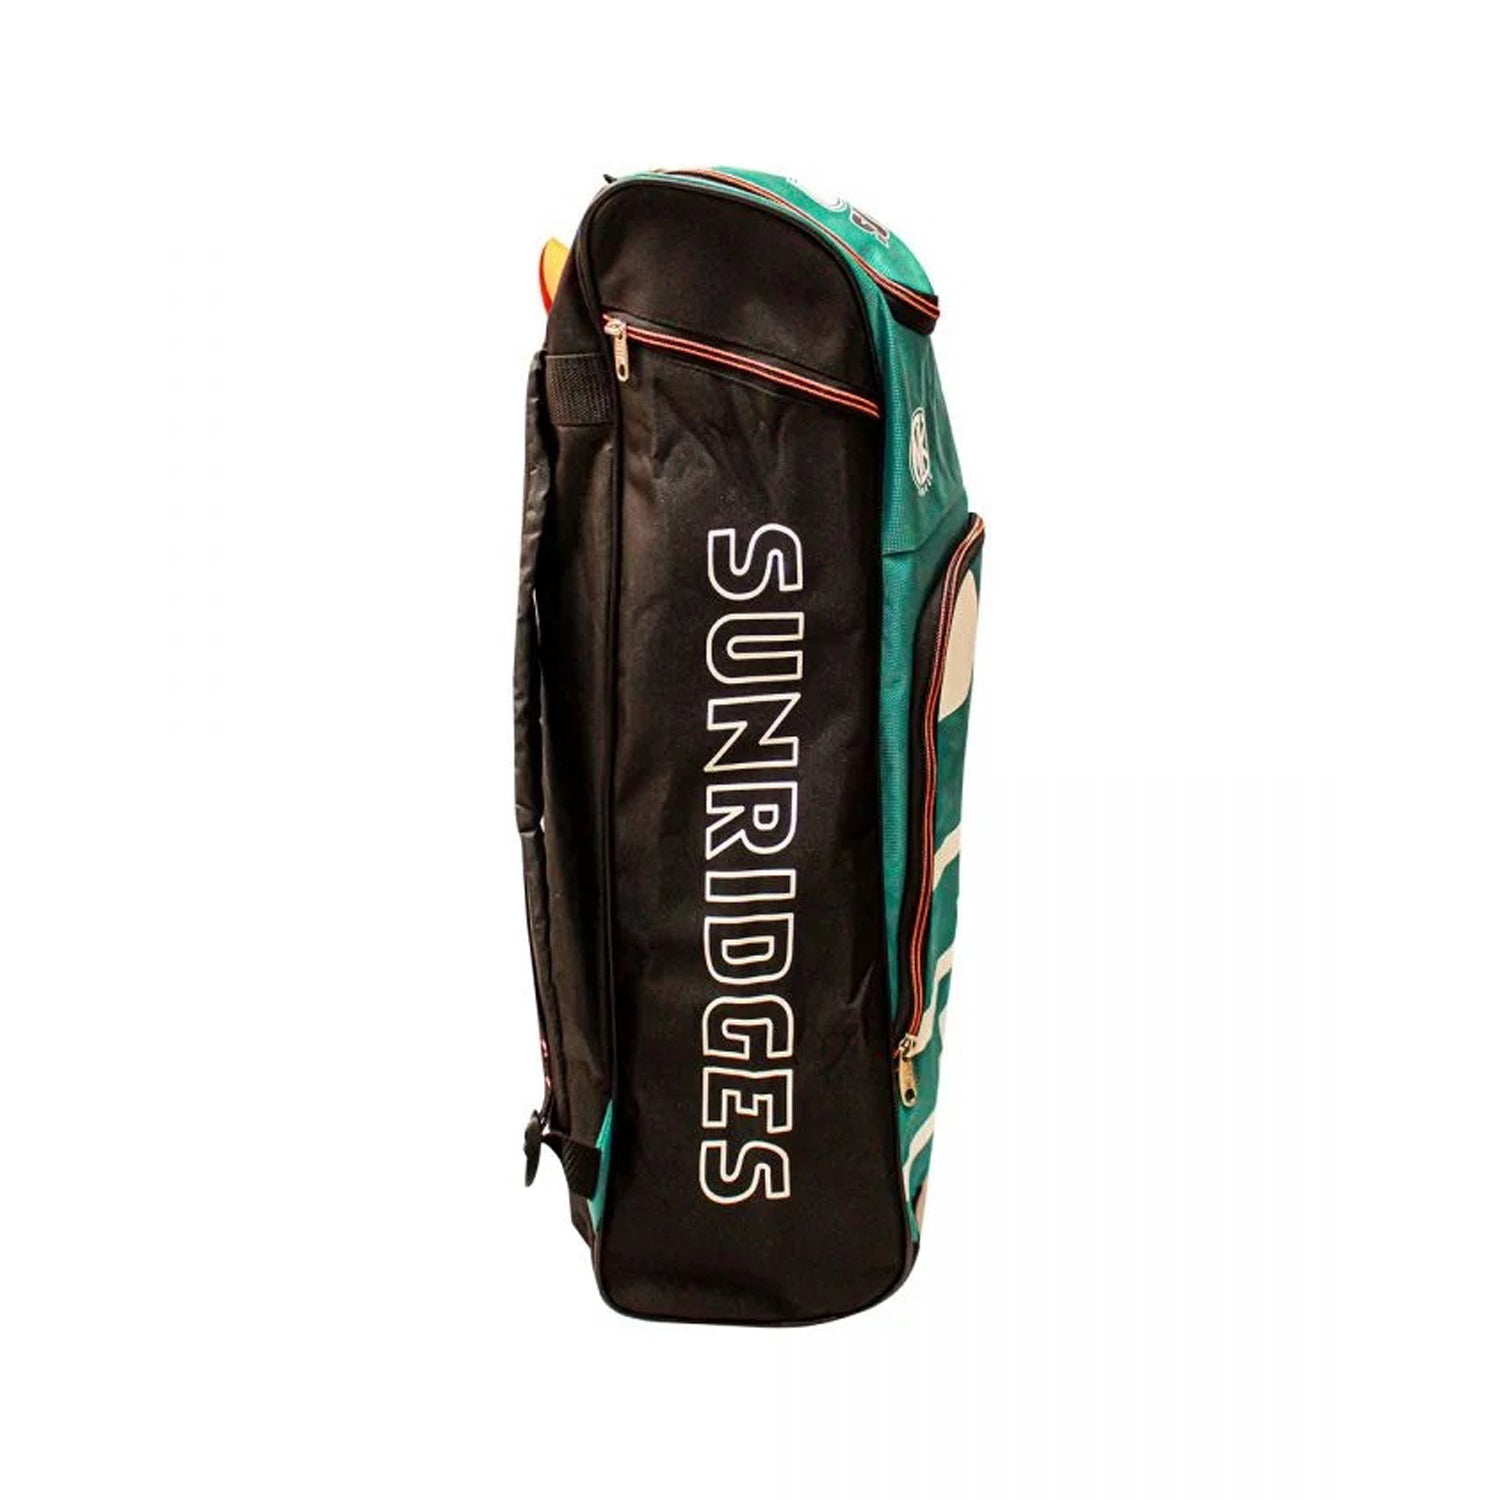 SS Master 99 Cricket Kit Bag - Best Price online Prokicksports.com